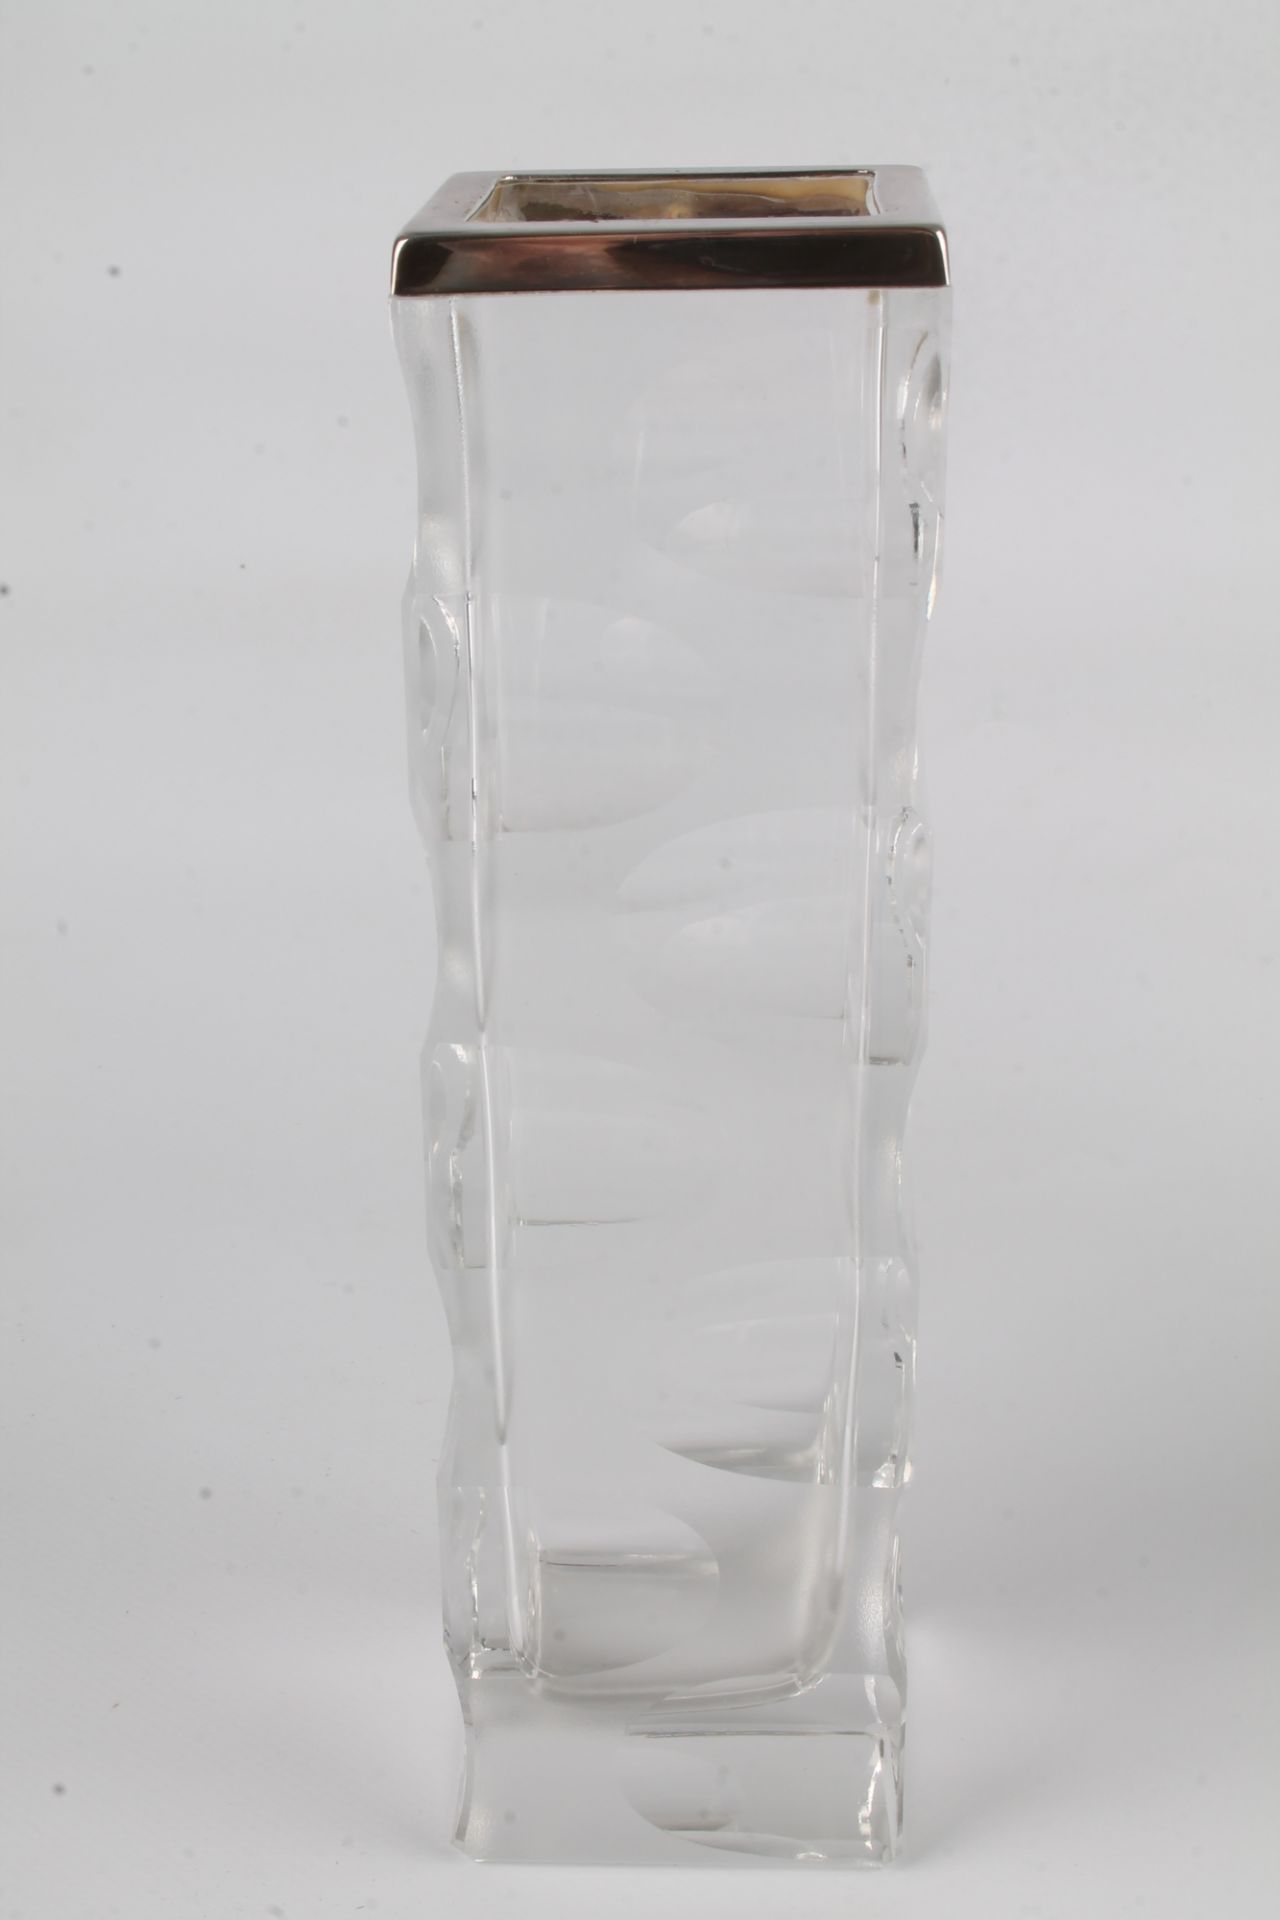 3 Kristallvasen mit Silbermontierung, 3 crystal vases with silver mounting, - Image 3 of 8